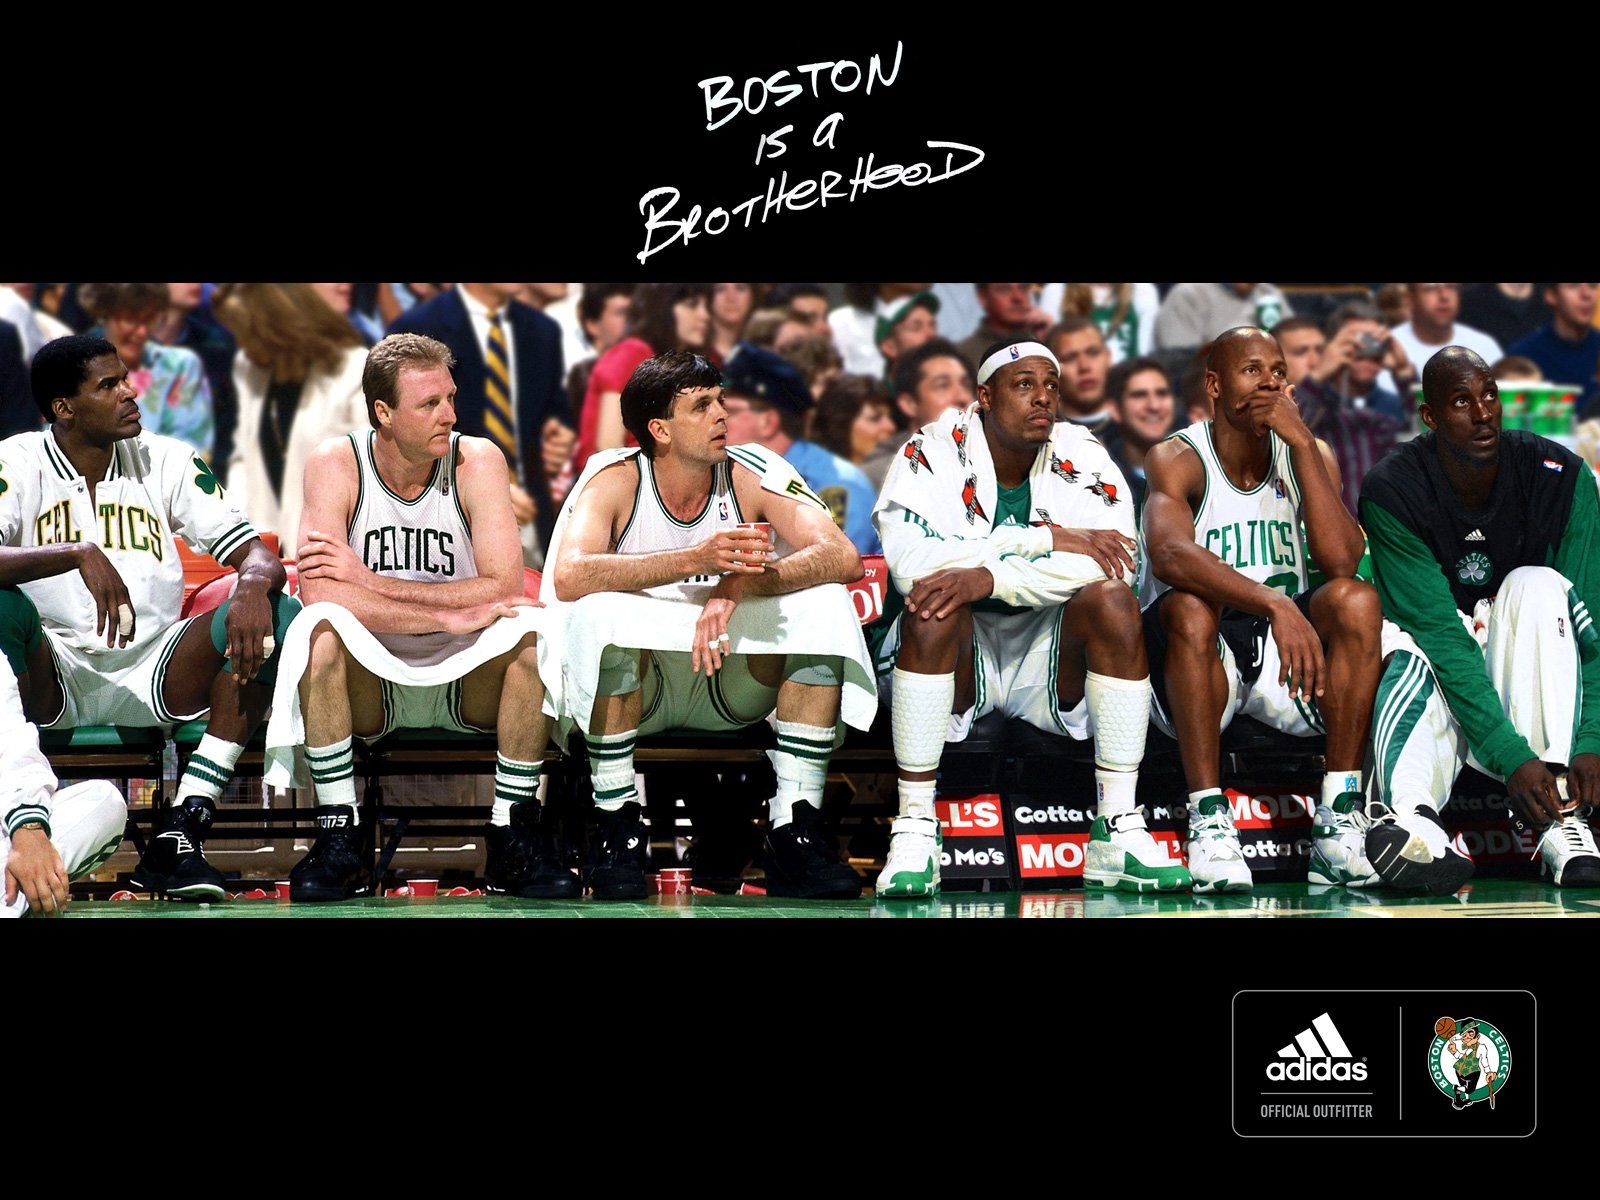 Boston Sports Desktop Wallpaper | Desktop Image